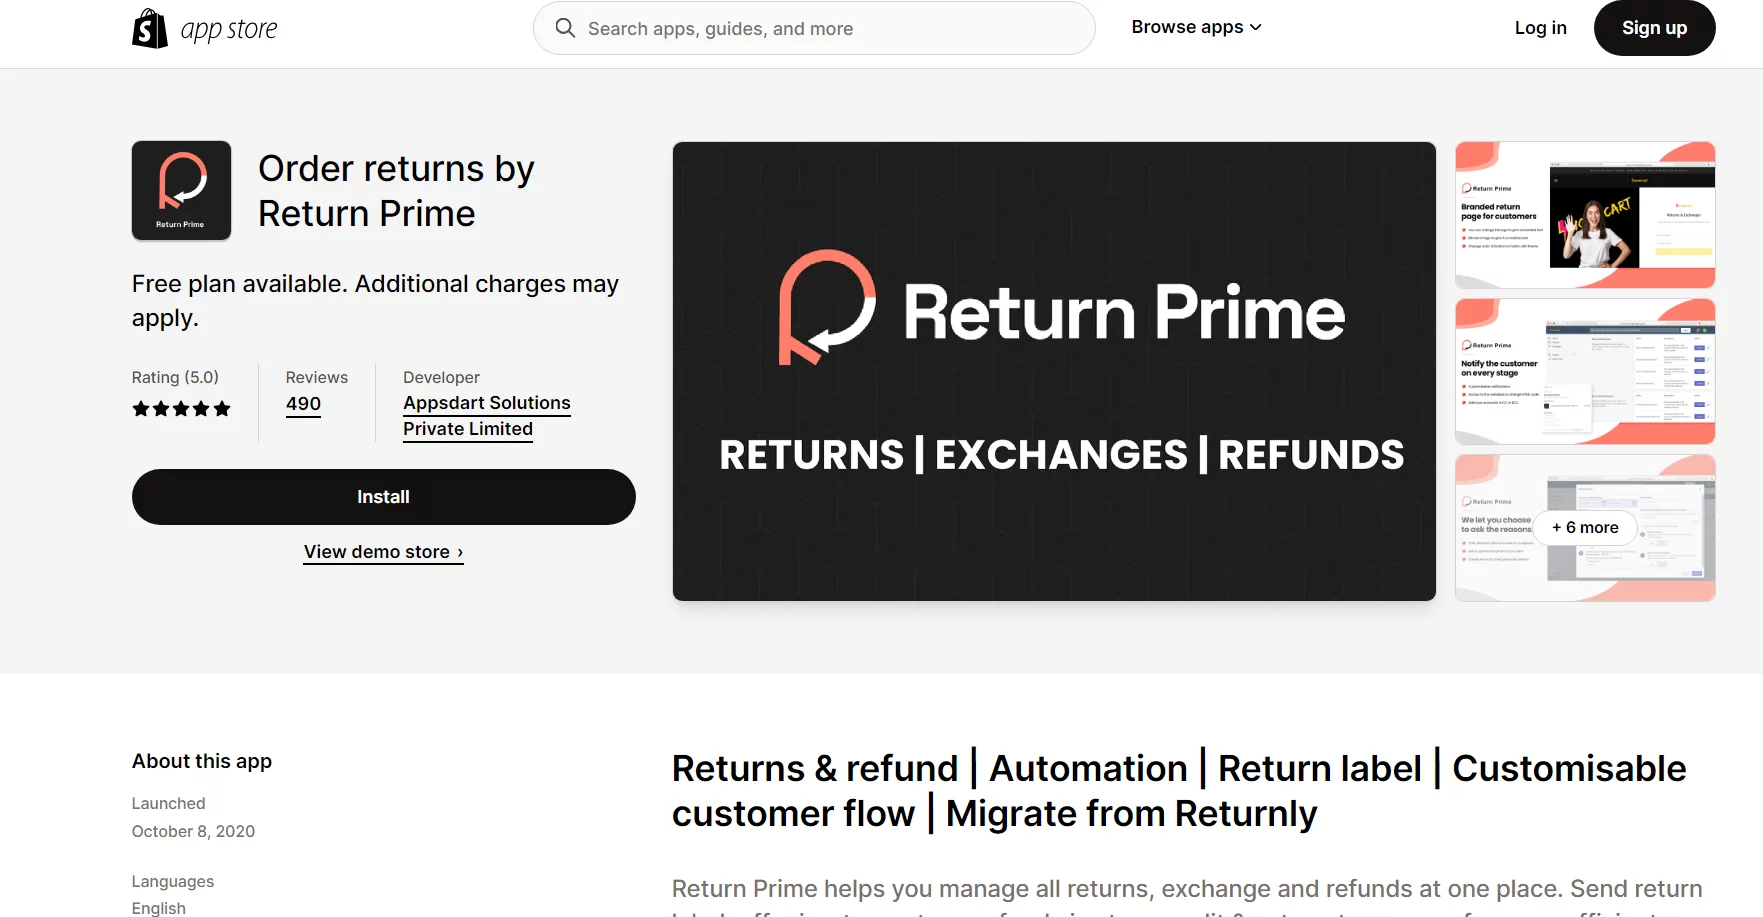 Order returns by Return Prime